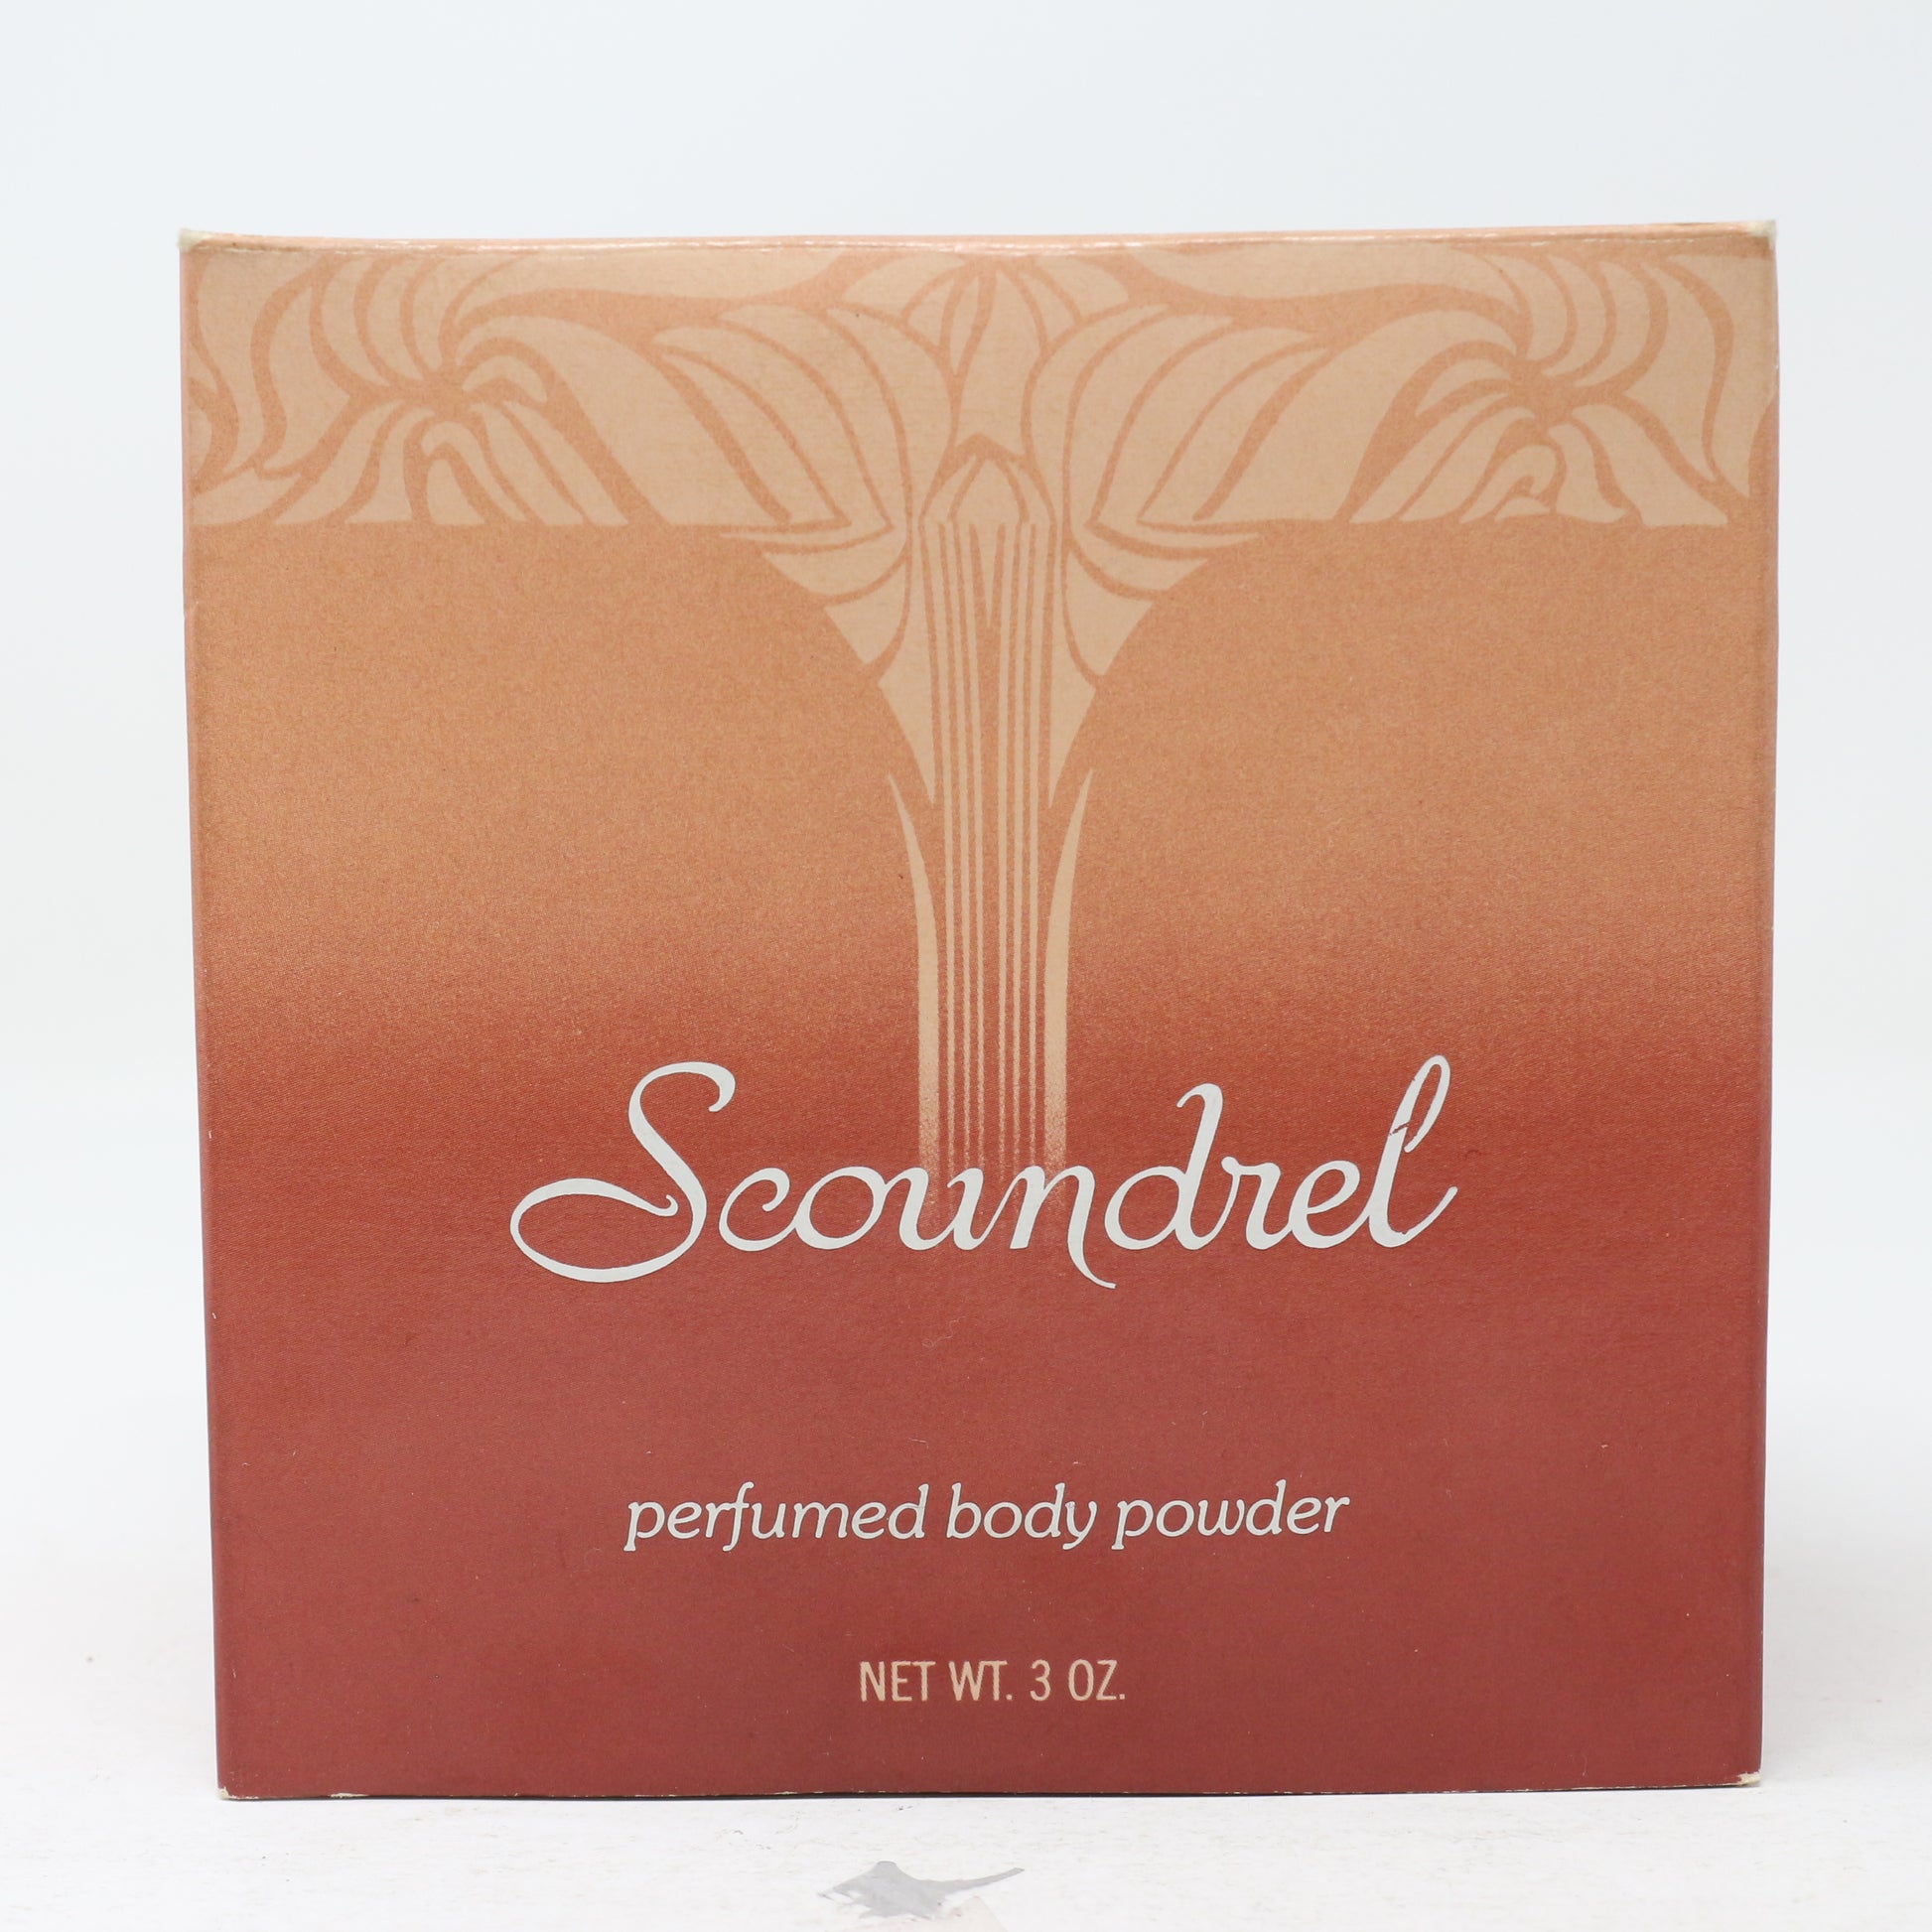 Scoundrel Perfumed Body Powder 88 mL